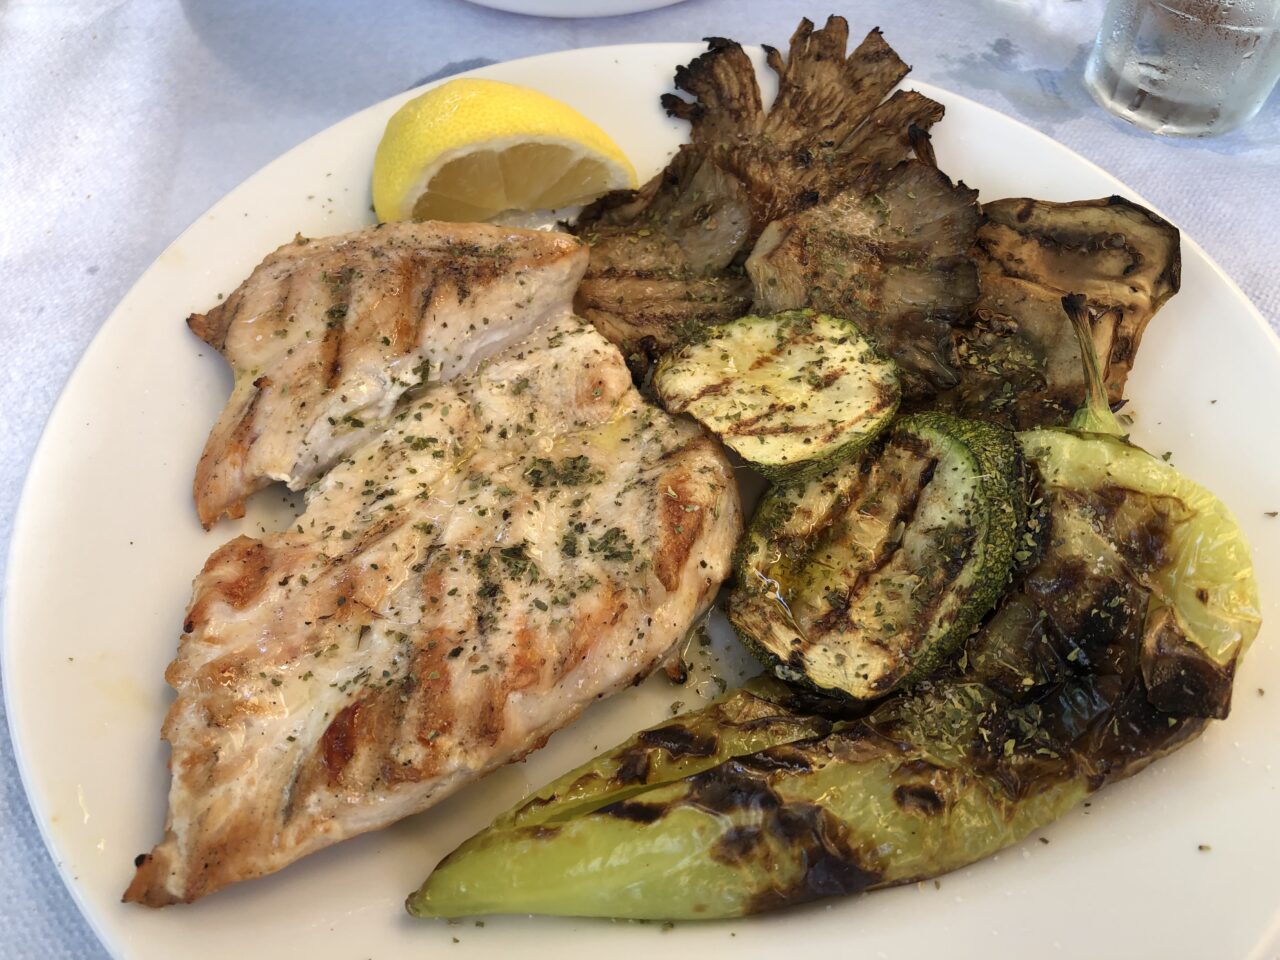 Greek Dish - Everyone Loves Greek Food!